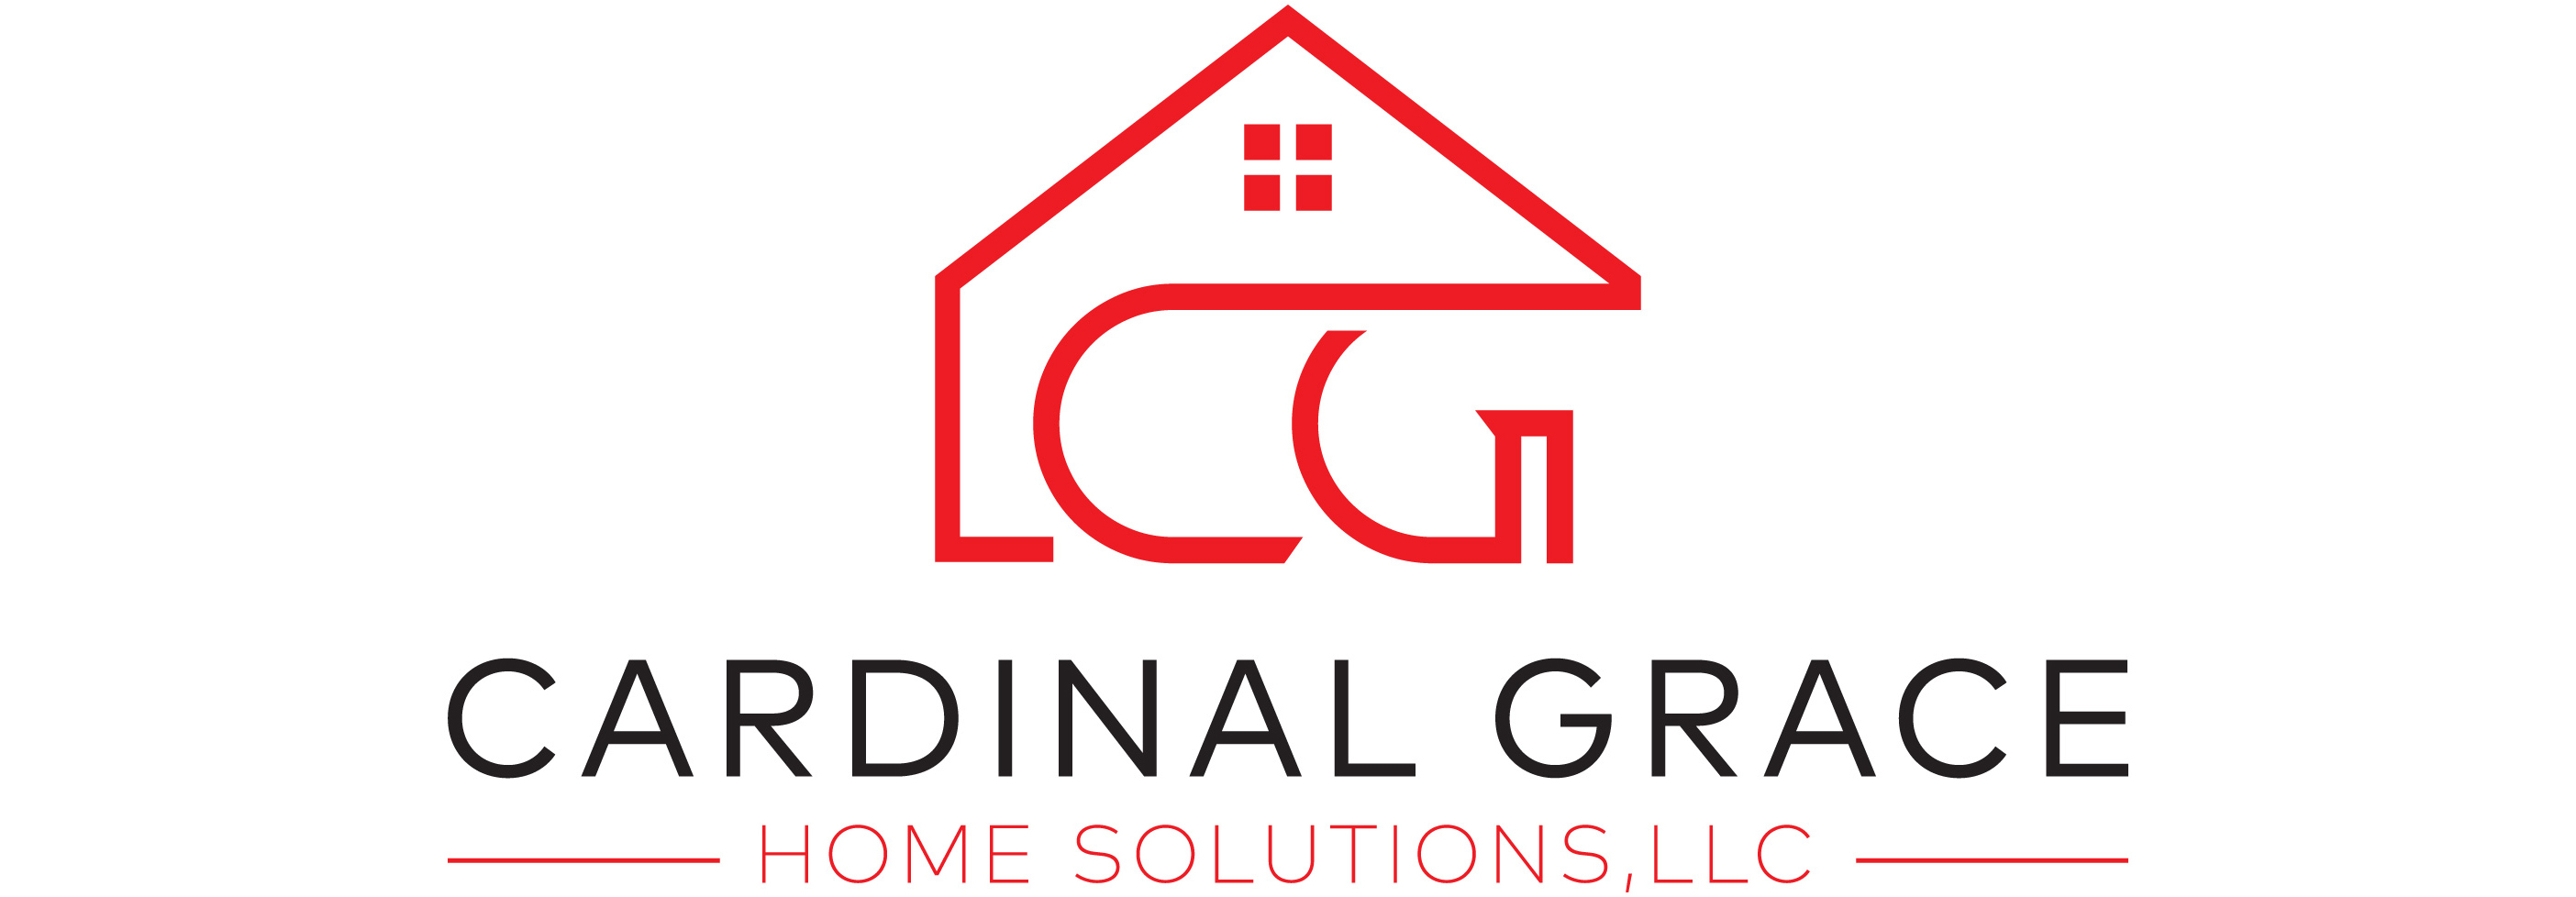 Cardinal Grace Home Solutions